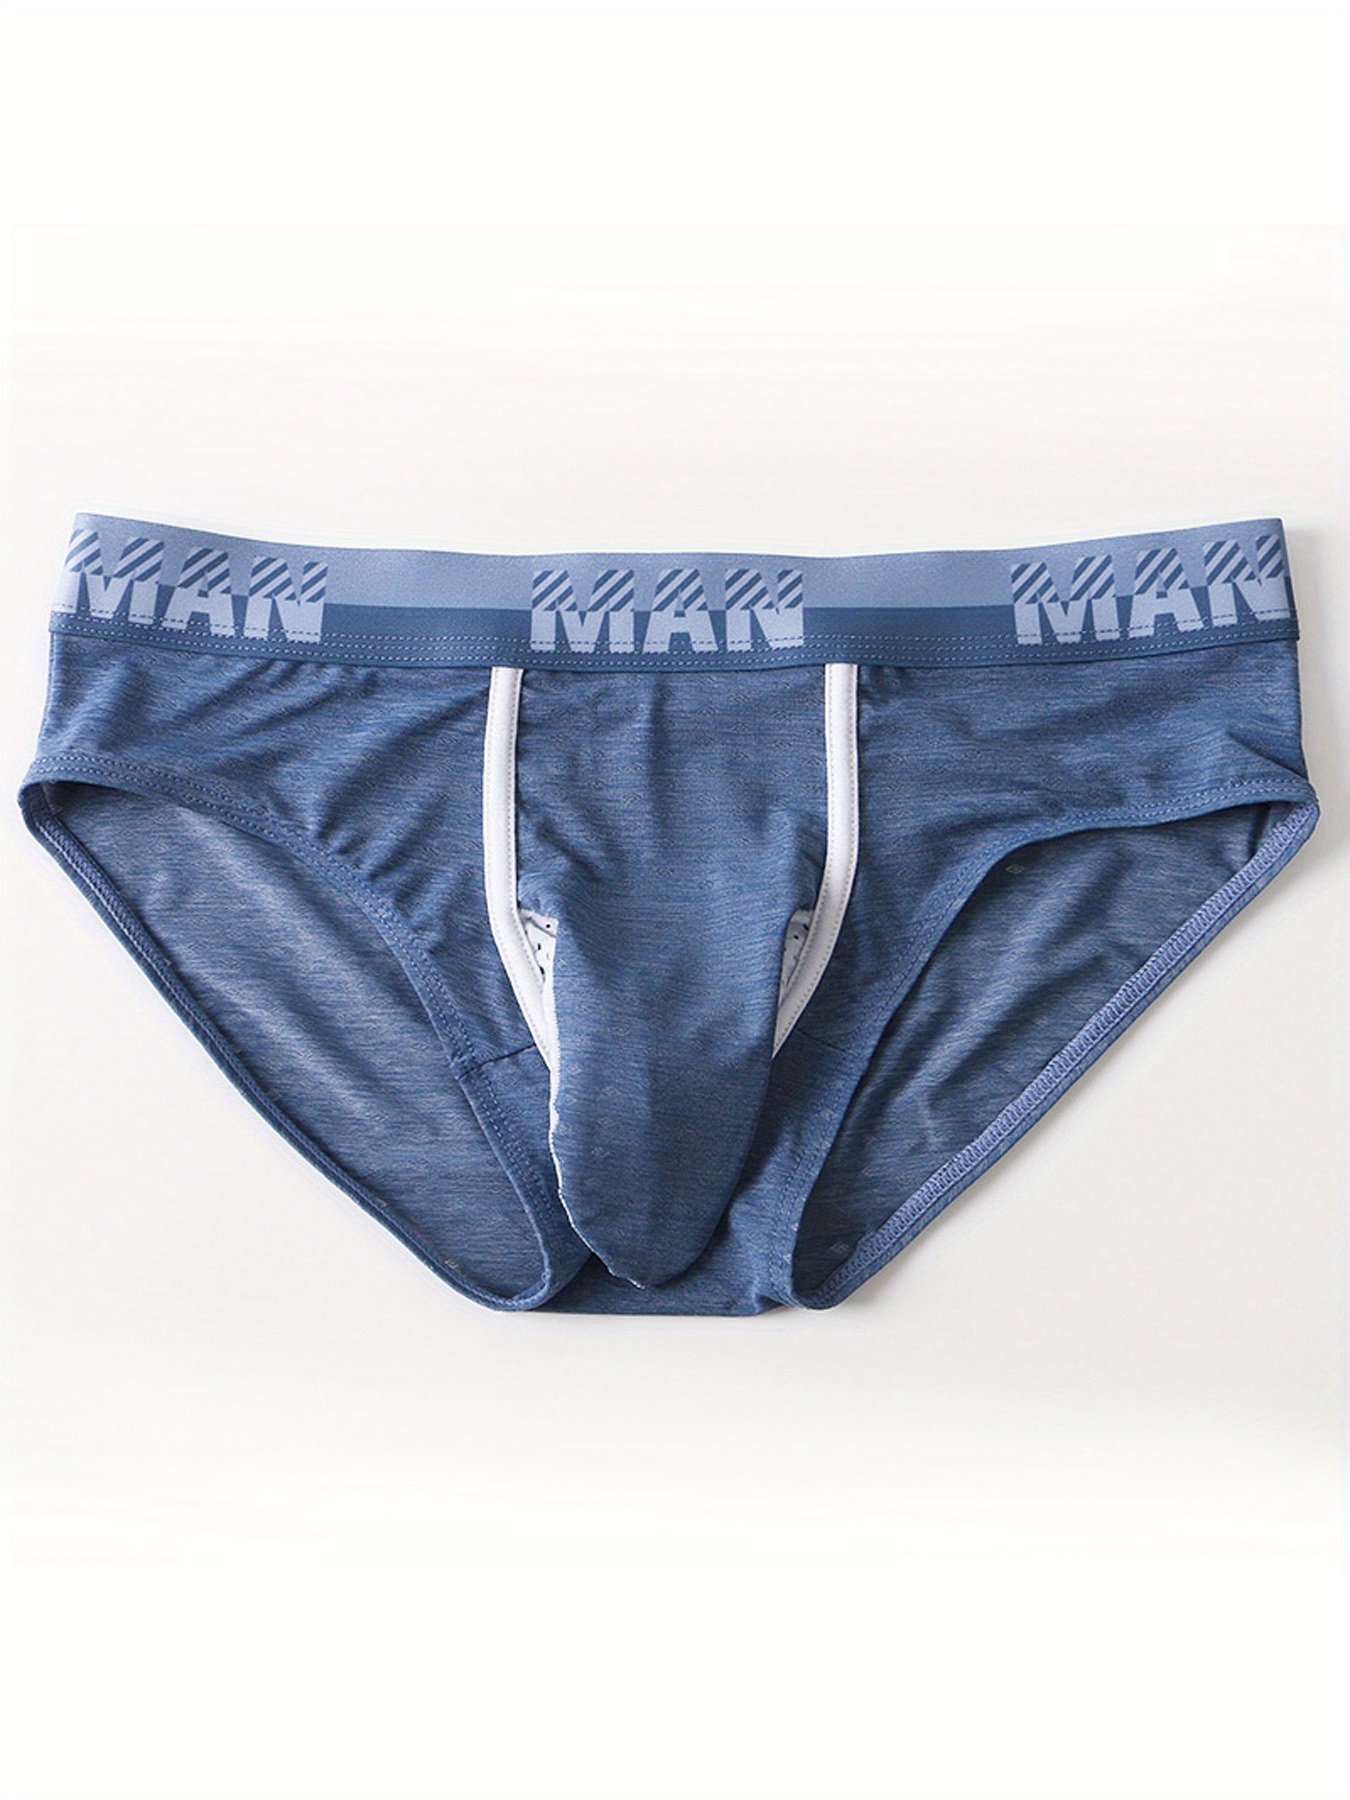 Mendove Men's Liquid Metallic Contour Pouch Thong Underwear Size Small  Sliver at  Men's Clothing store